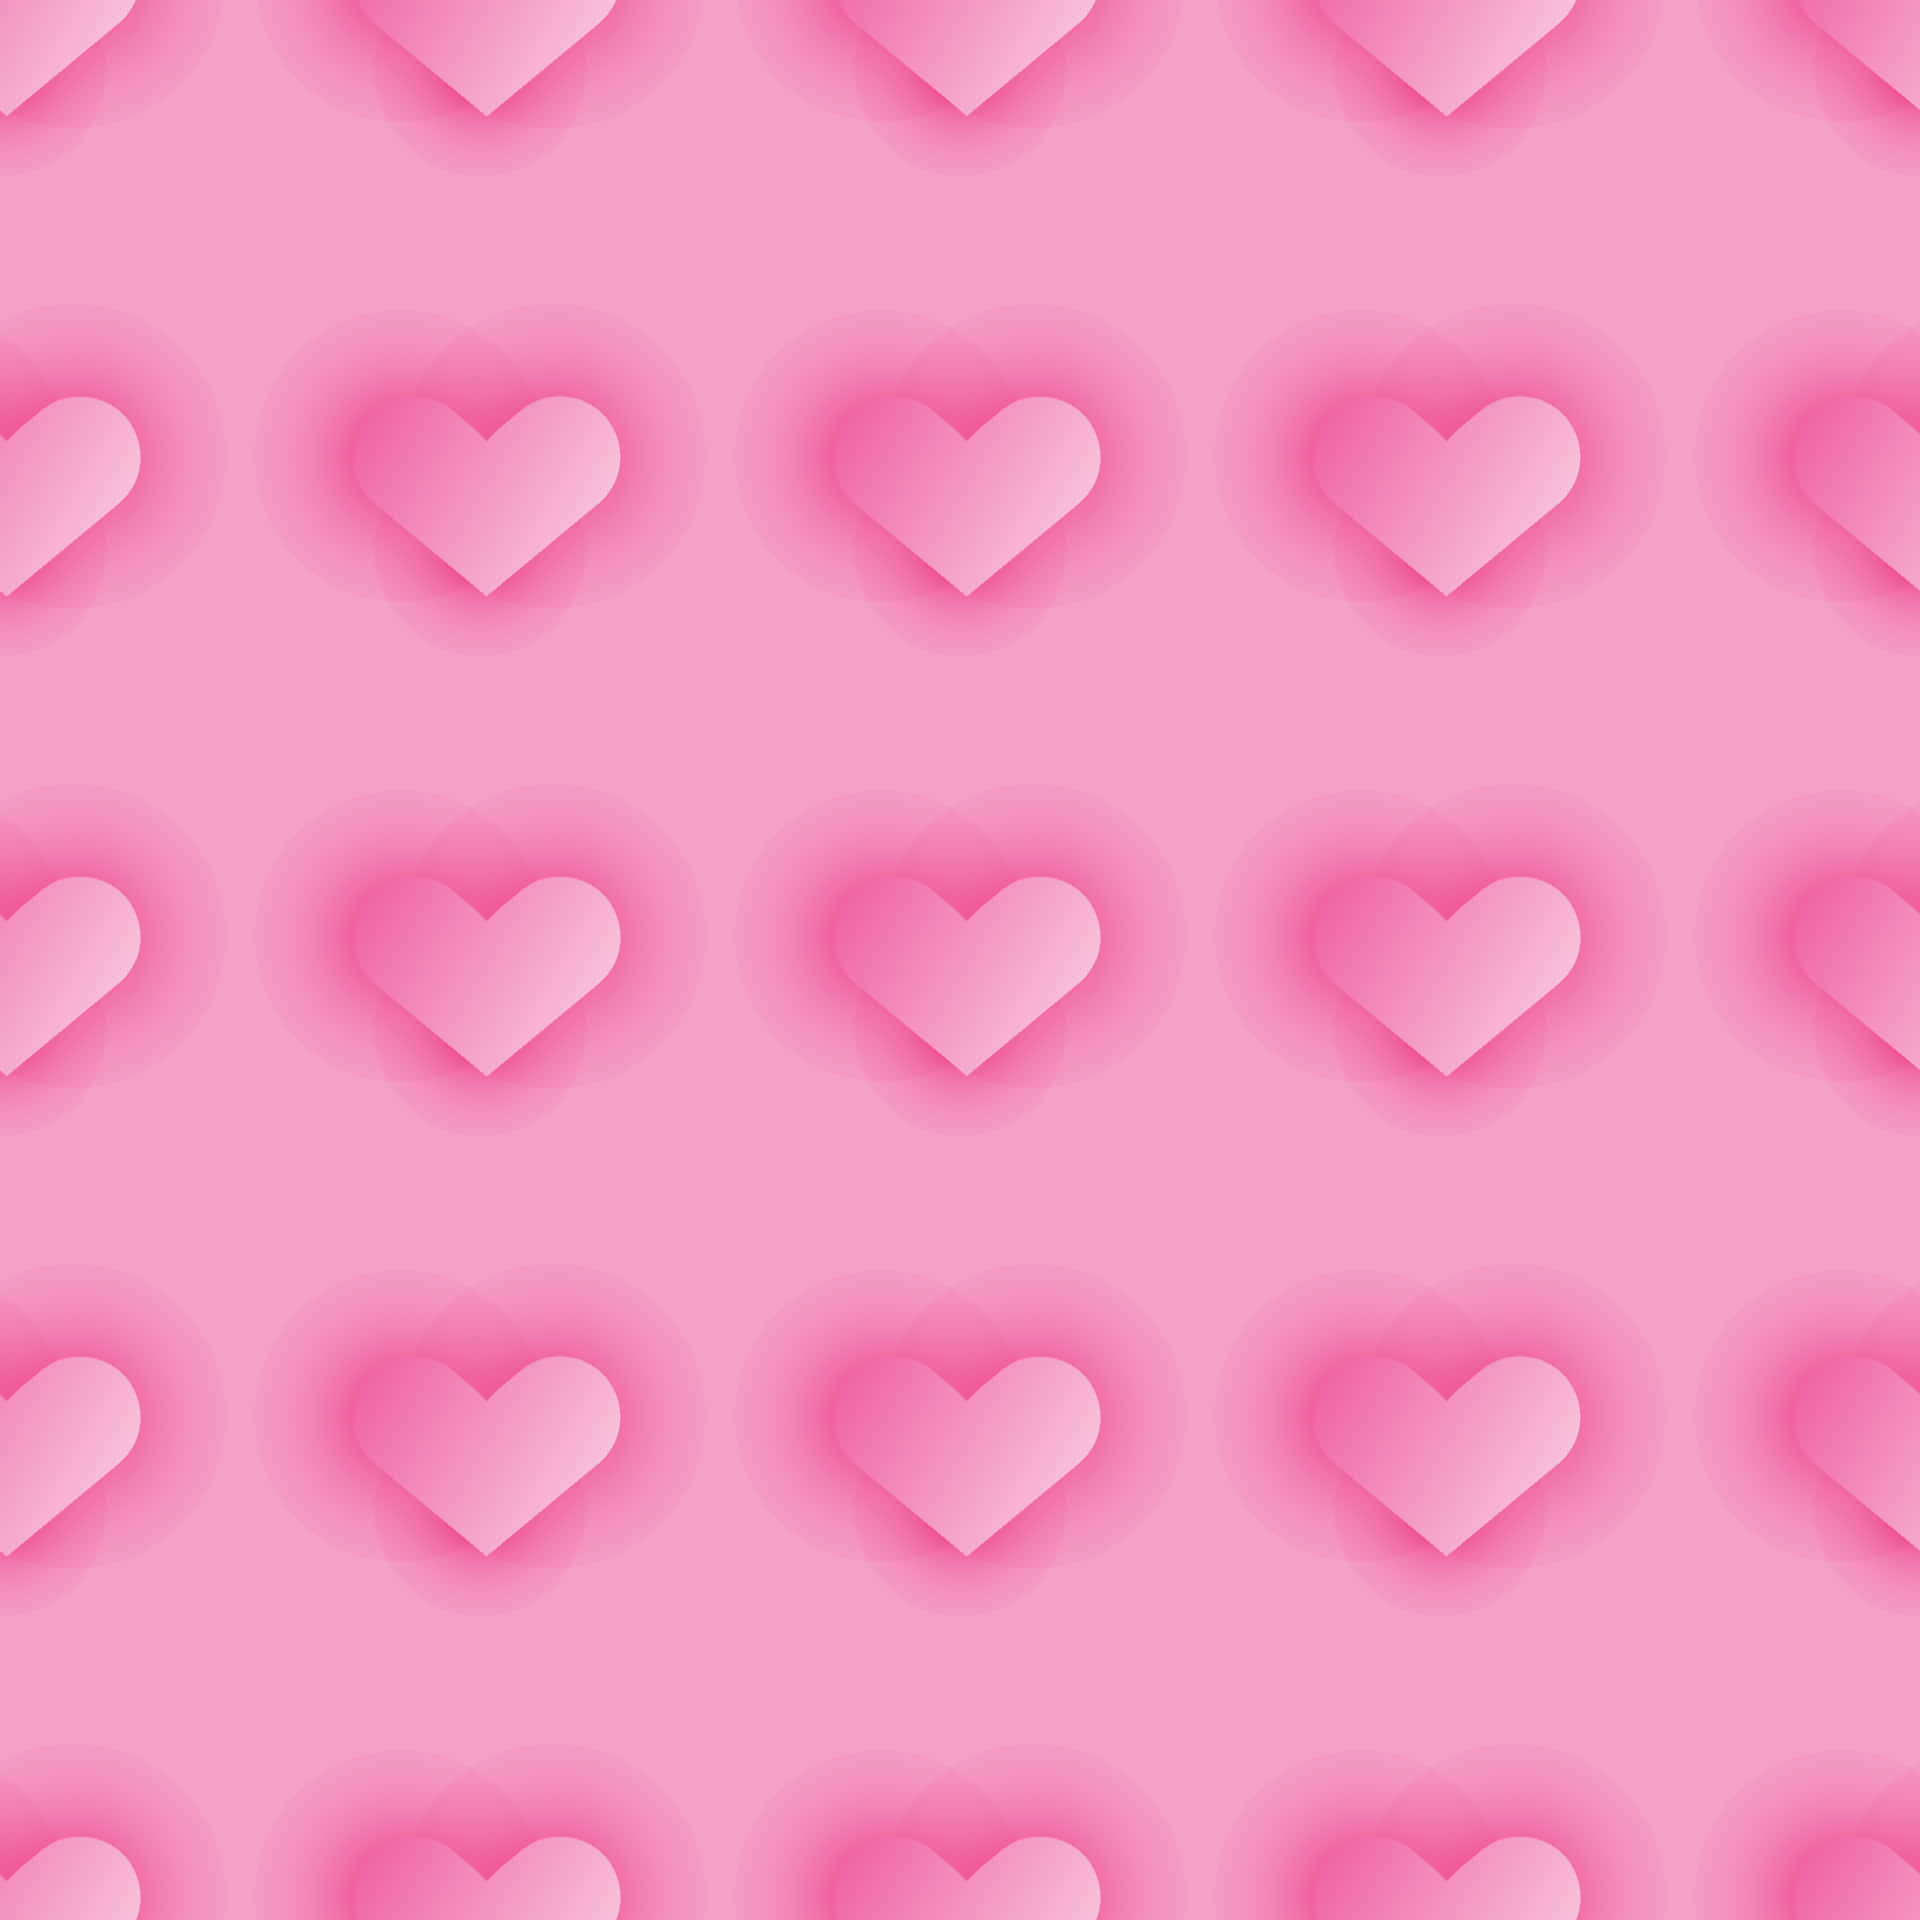 Louis vuitton iphone, Sugar Pink Pastel Aesthetic HD phone wallpaper